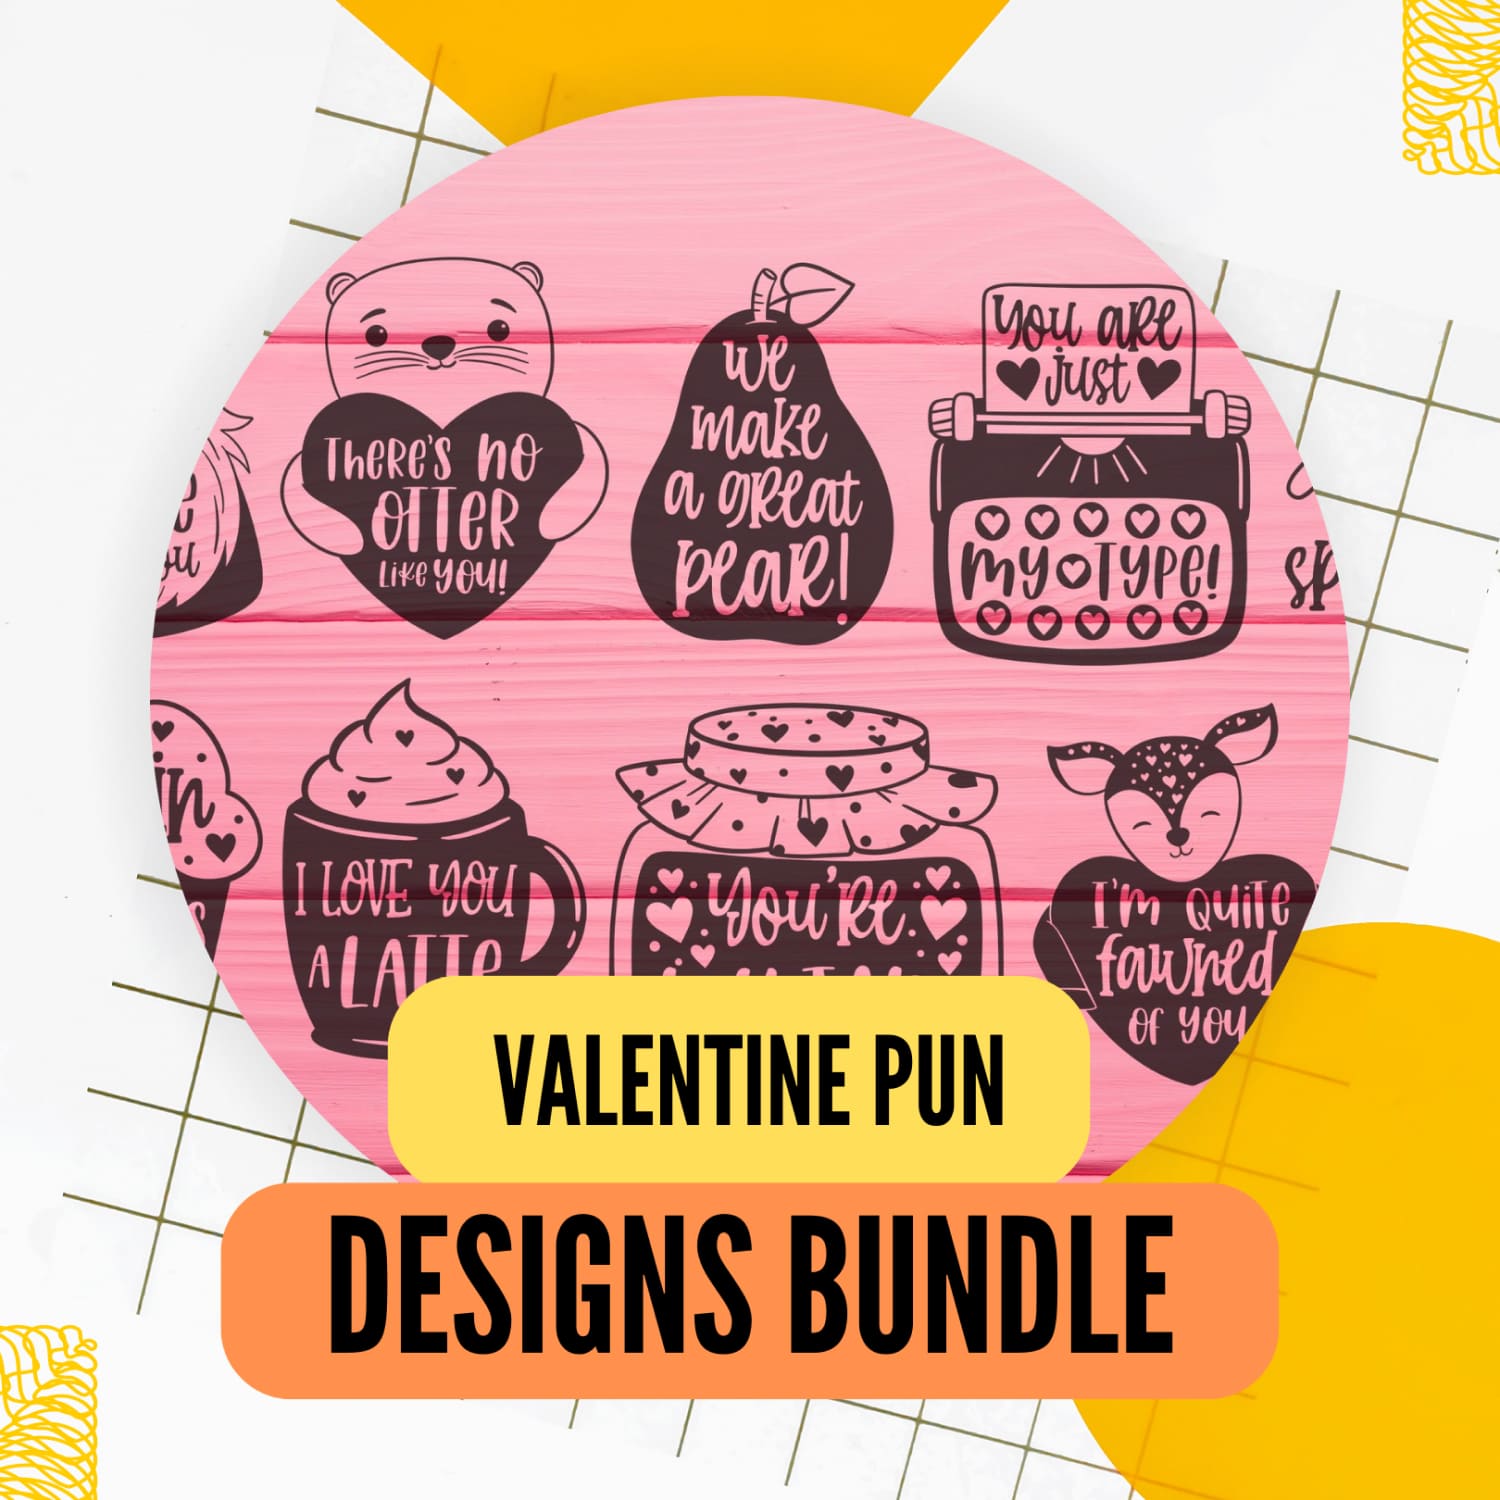 Valentine Pun designs bundle.